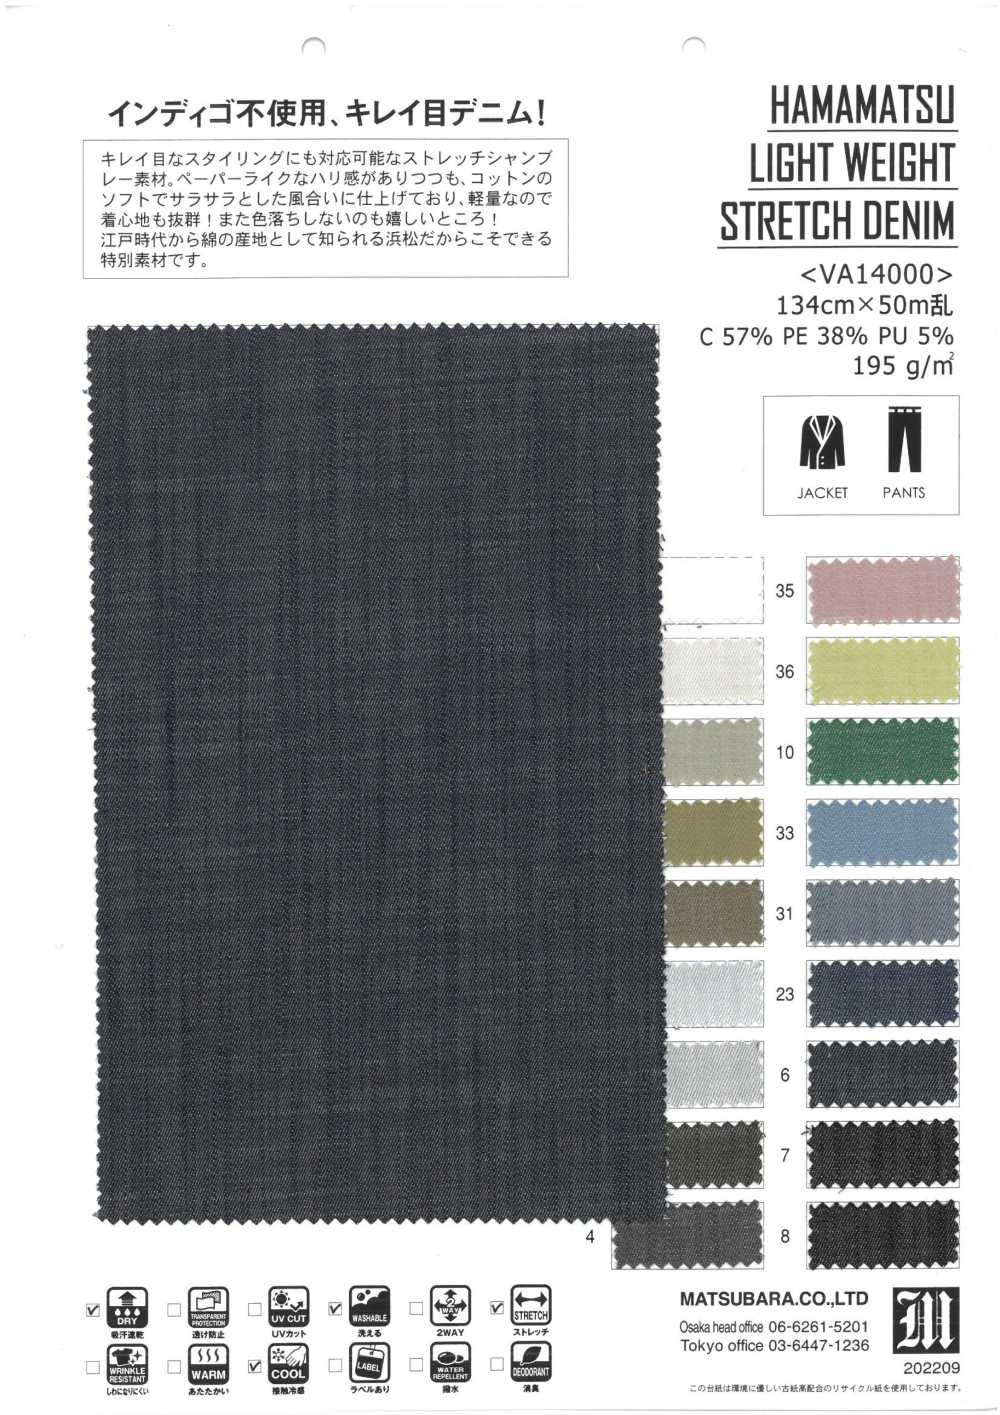 VA14000 HAMAMATSU LIGHT WEIGHT STRETCH DENIM[Textile / Fabric] Matsubara